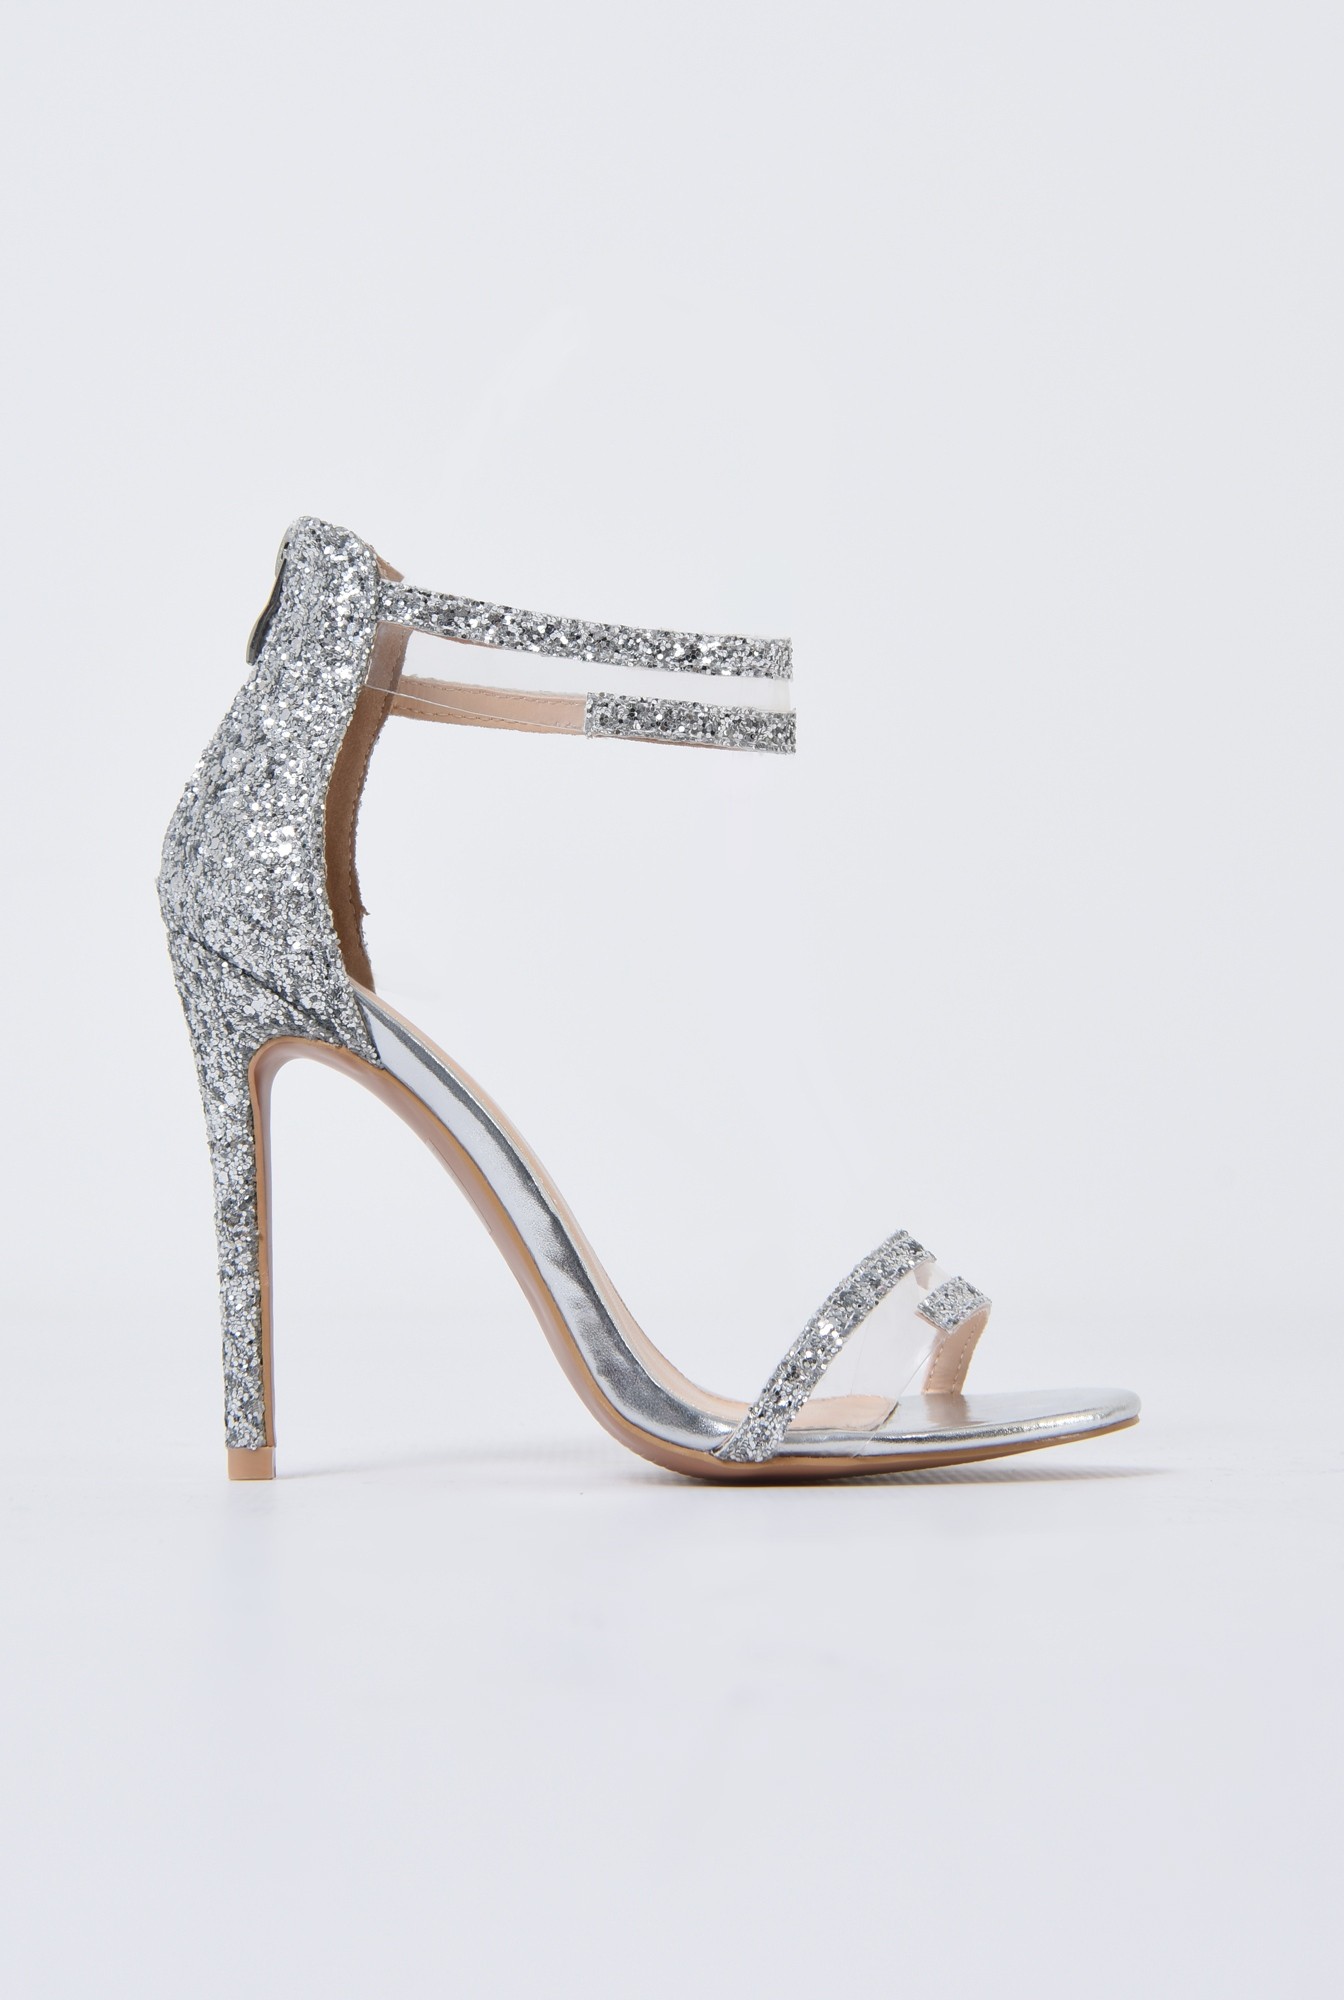 0 - sandale elegante, argintii, cu glitter, stiletto